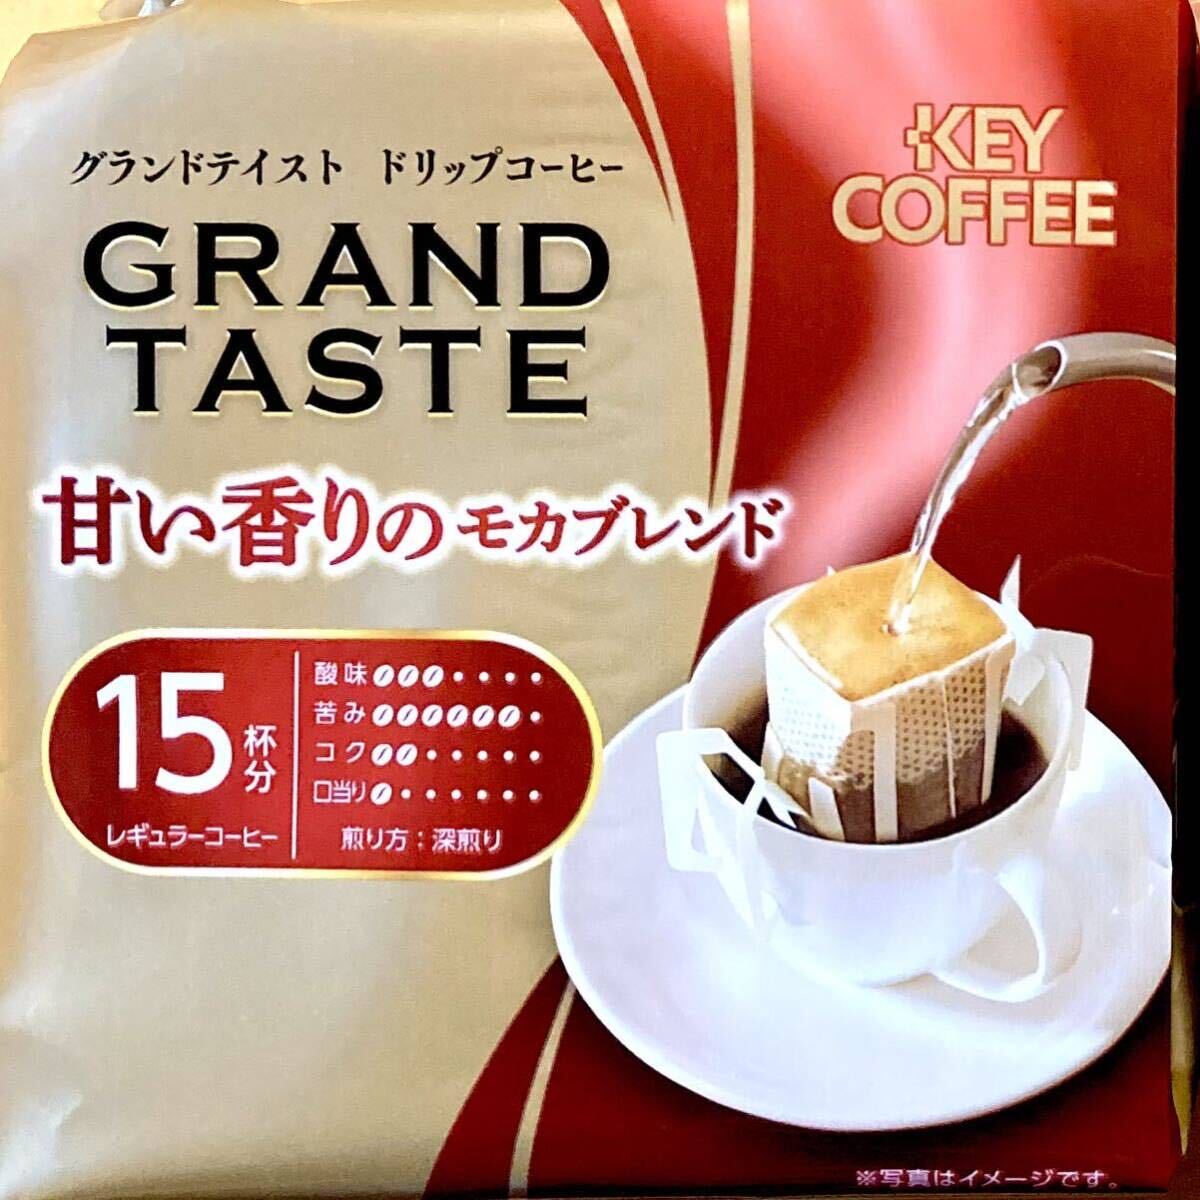  regular coffee drip coffee [ key coffee 3 kind 90 sack ] KEY COFFEE key coffee drip pack coffee * unopened shipping *